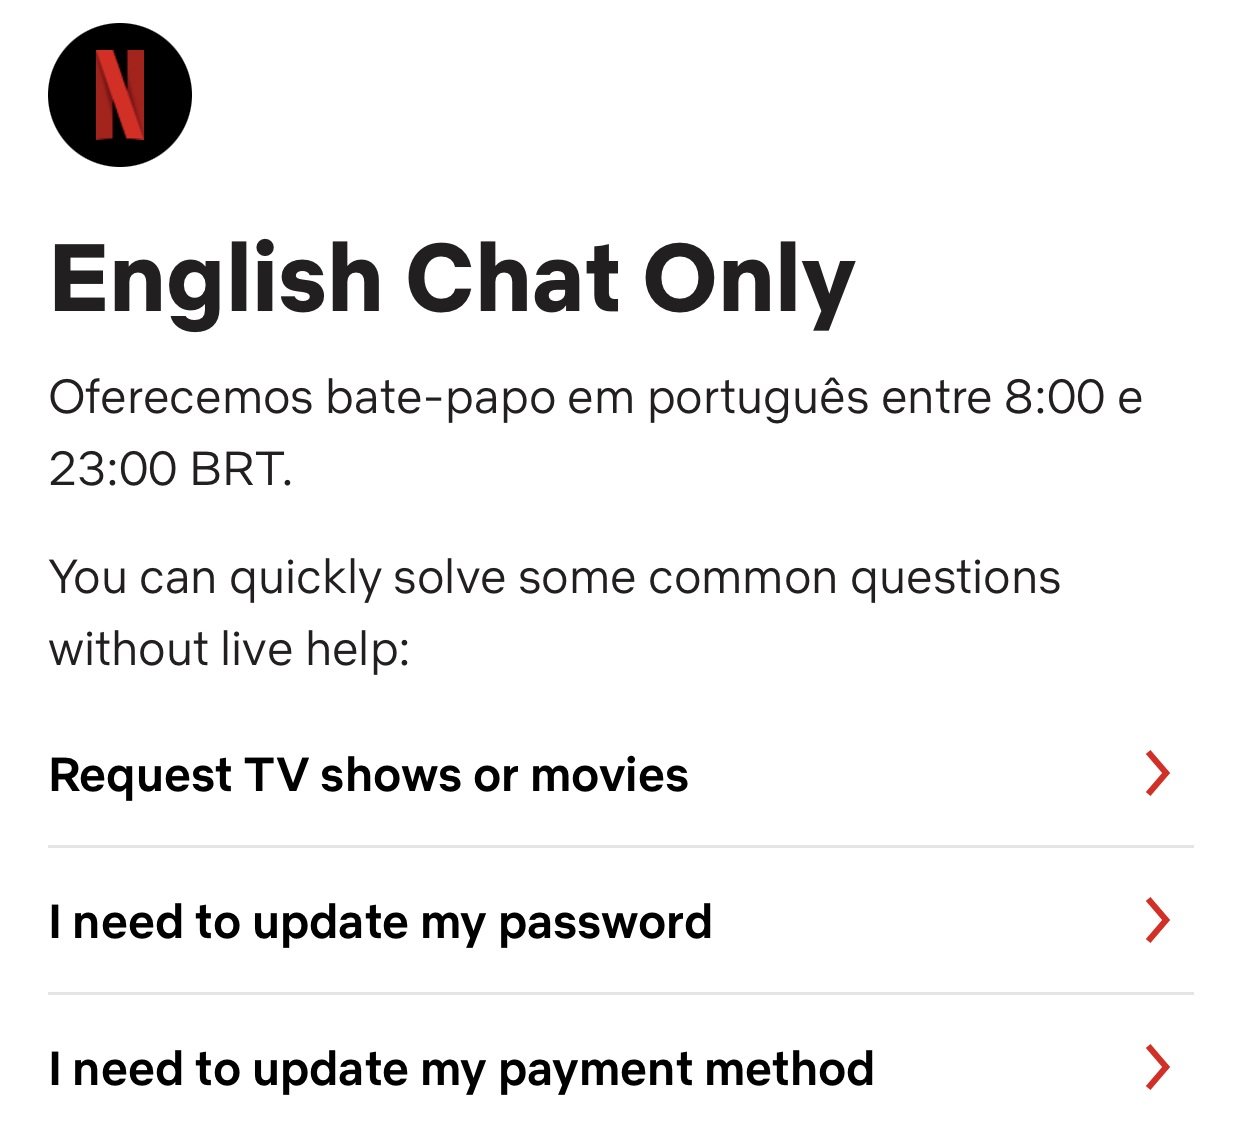 WhatsApp Netflix: Telefone, Chat, Falar com Atendente, 0800